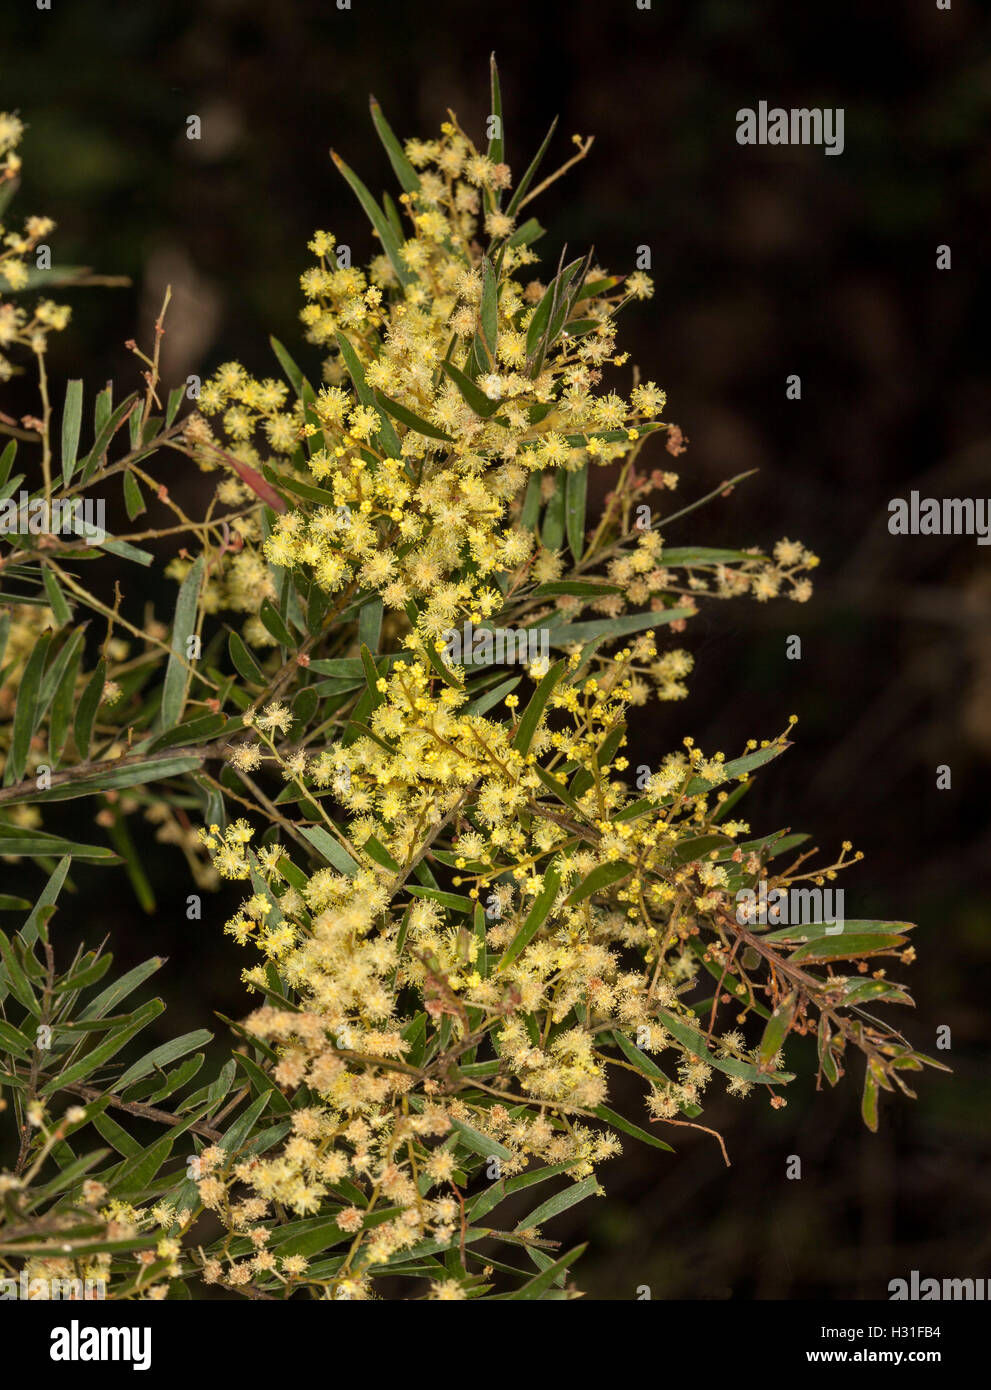 Cluster of yellow flowers & fine green leaves of Acacia fimbriata, Brisbane wattle, Australian native, against dark background Stock Photo